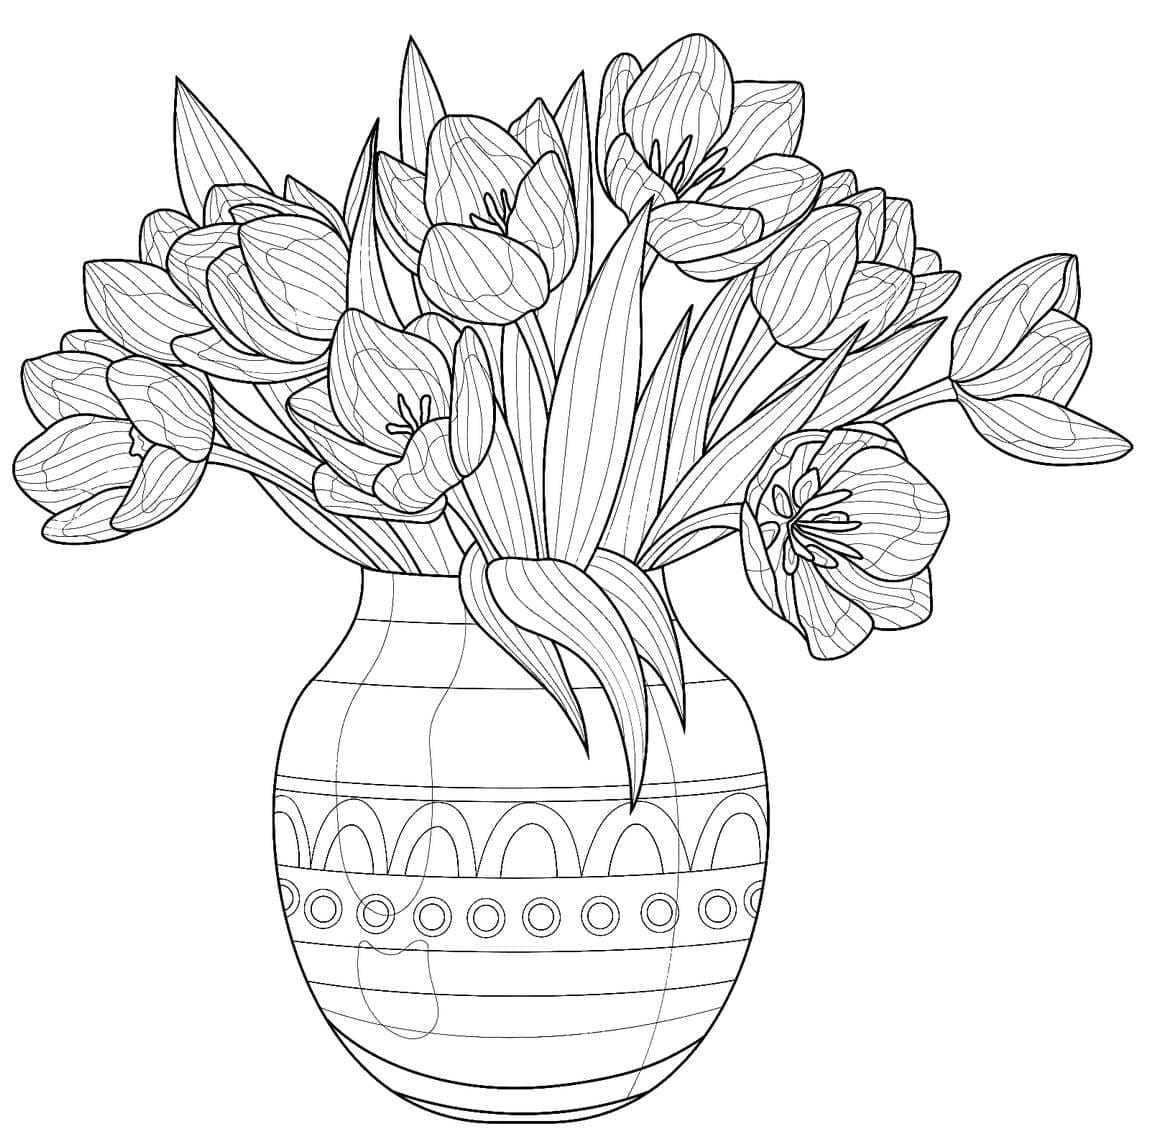 Vase de Tulipes coloring page